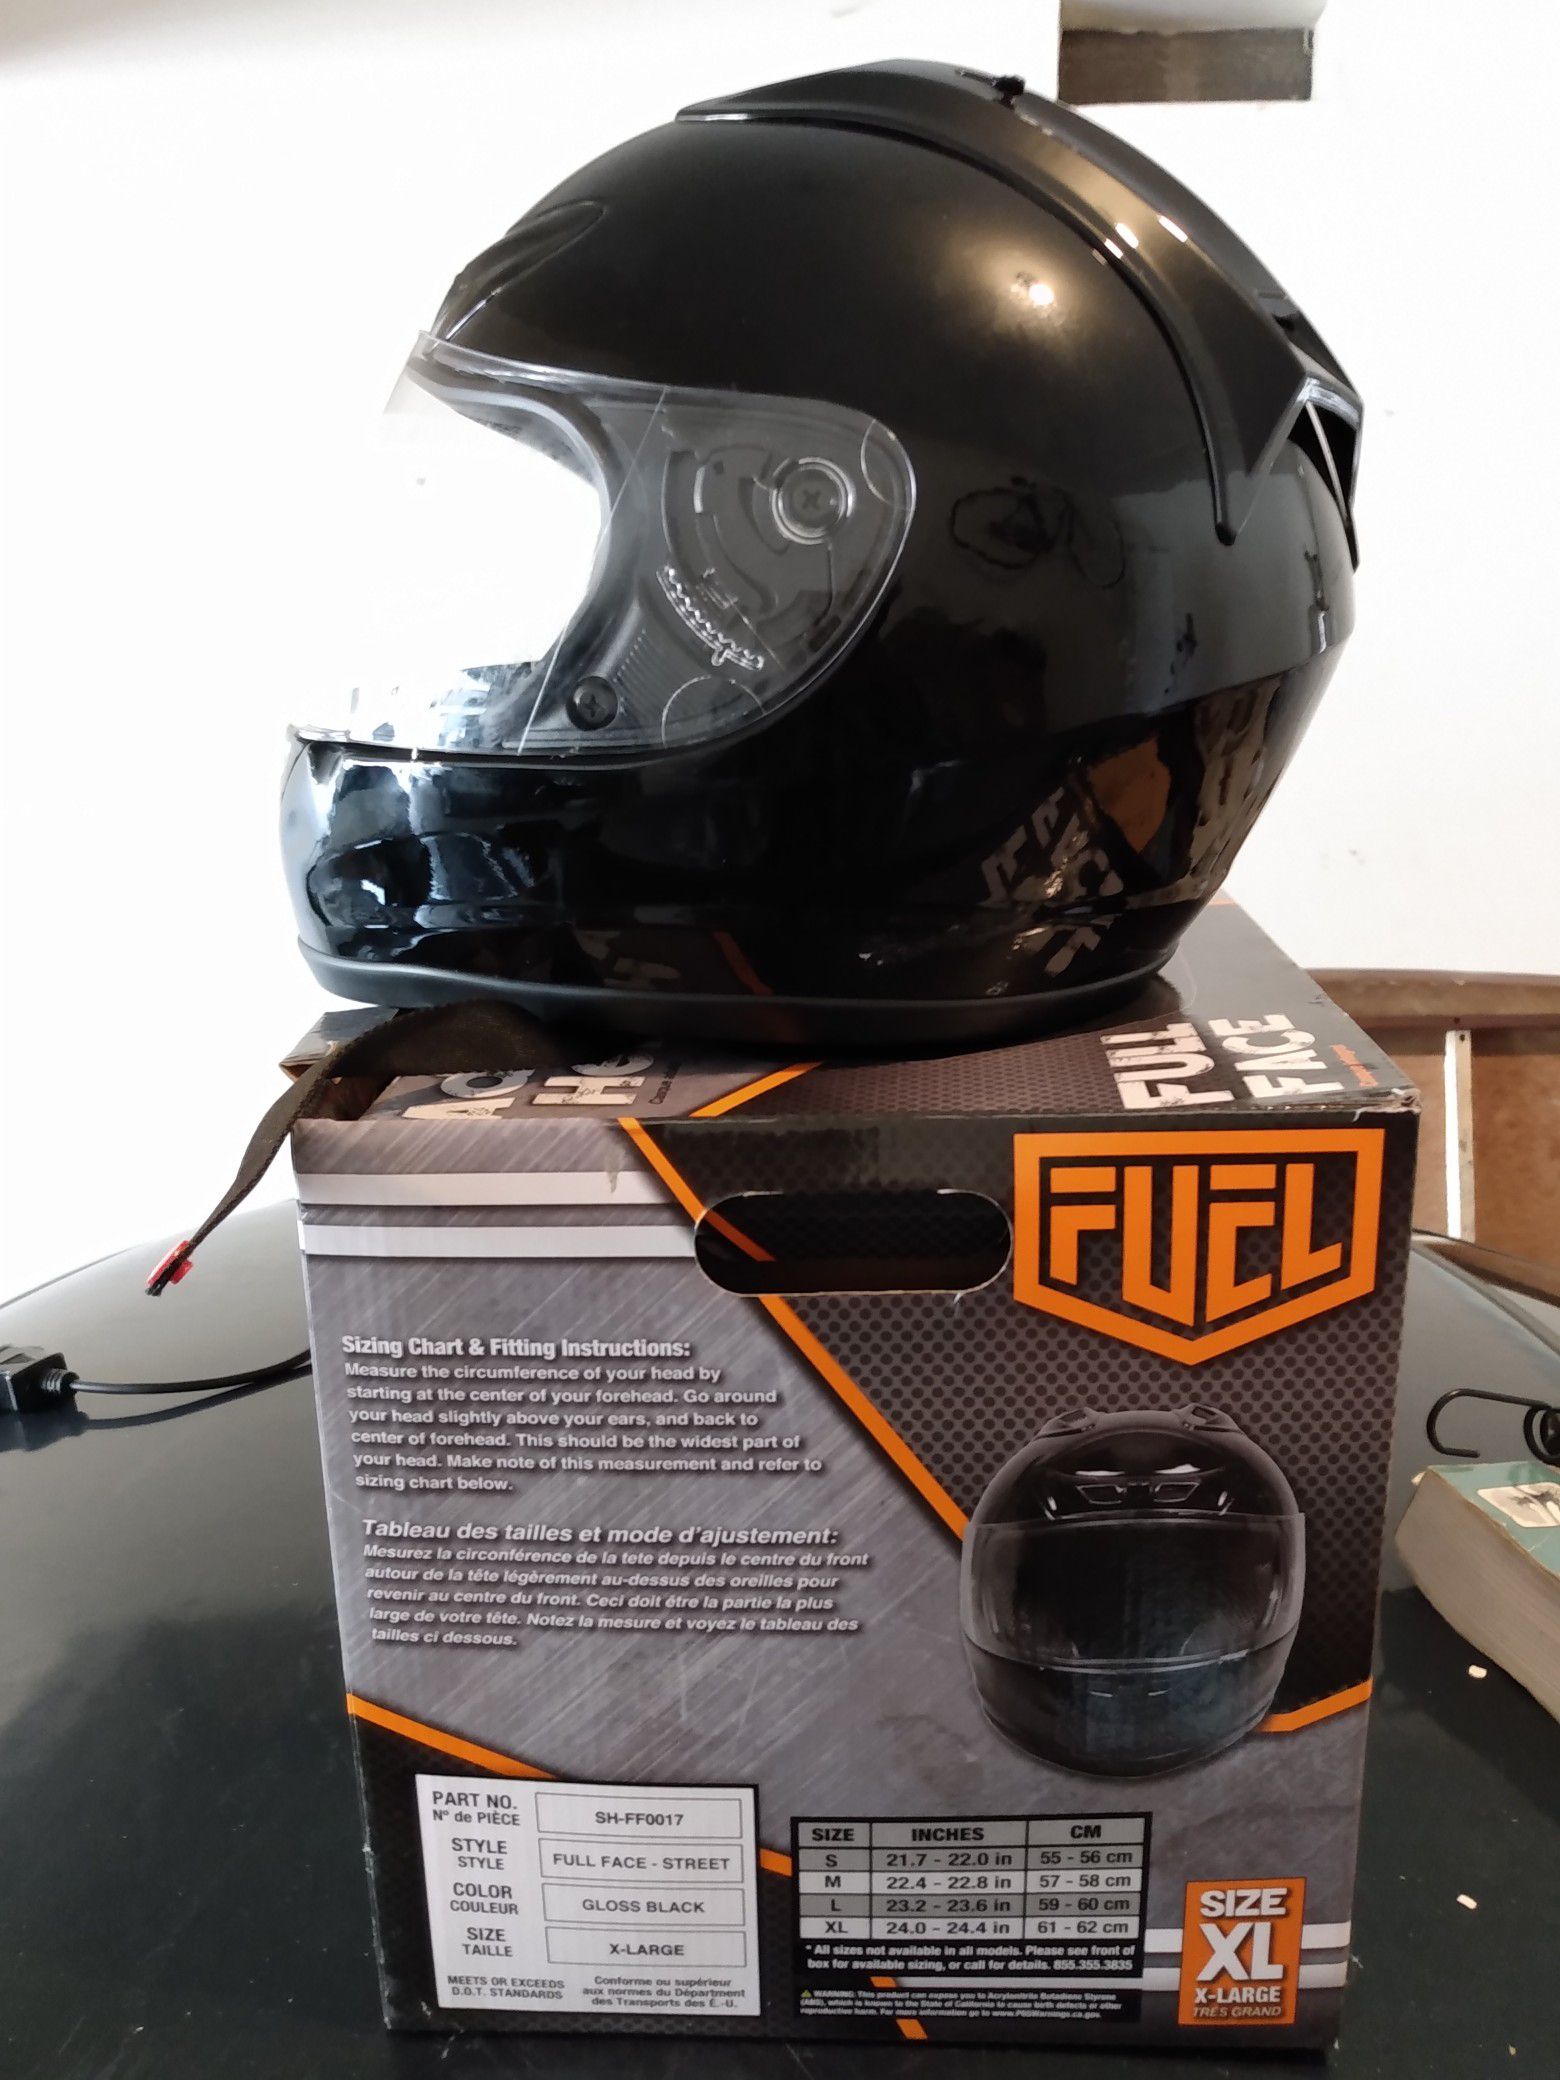 XL Fuel motorcycle helmet